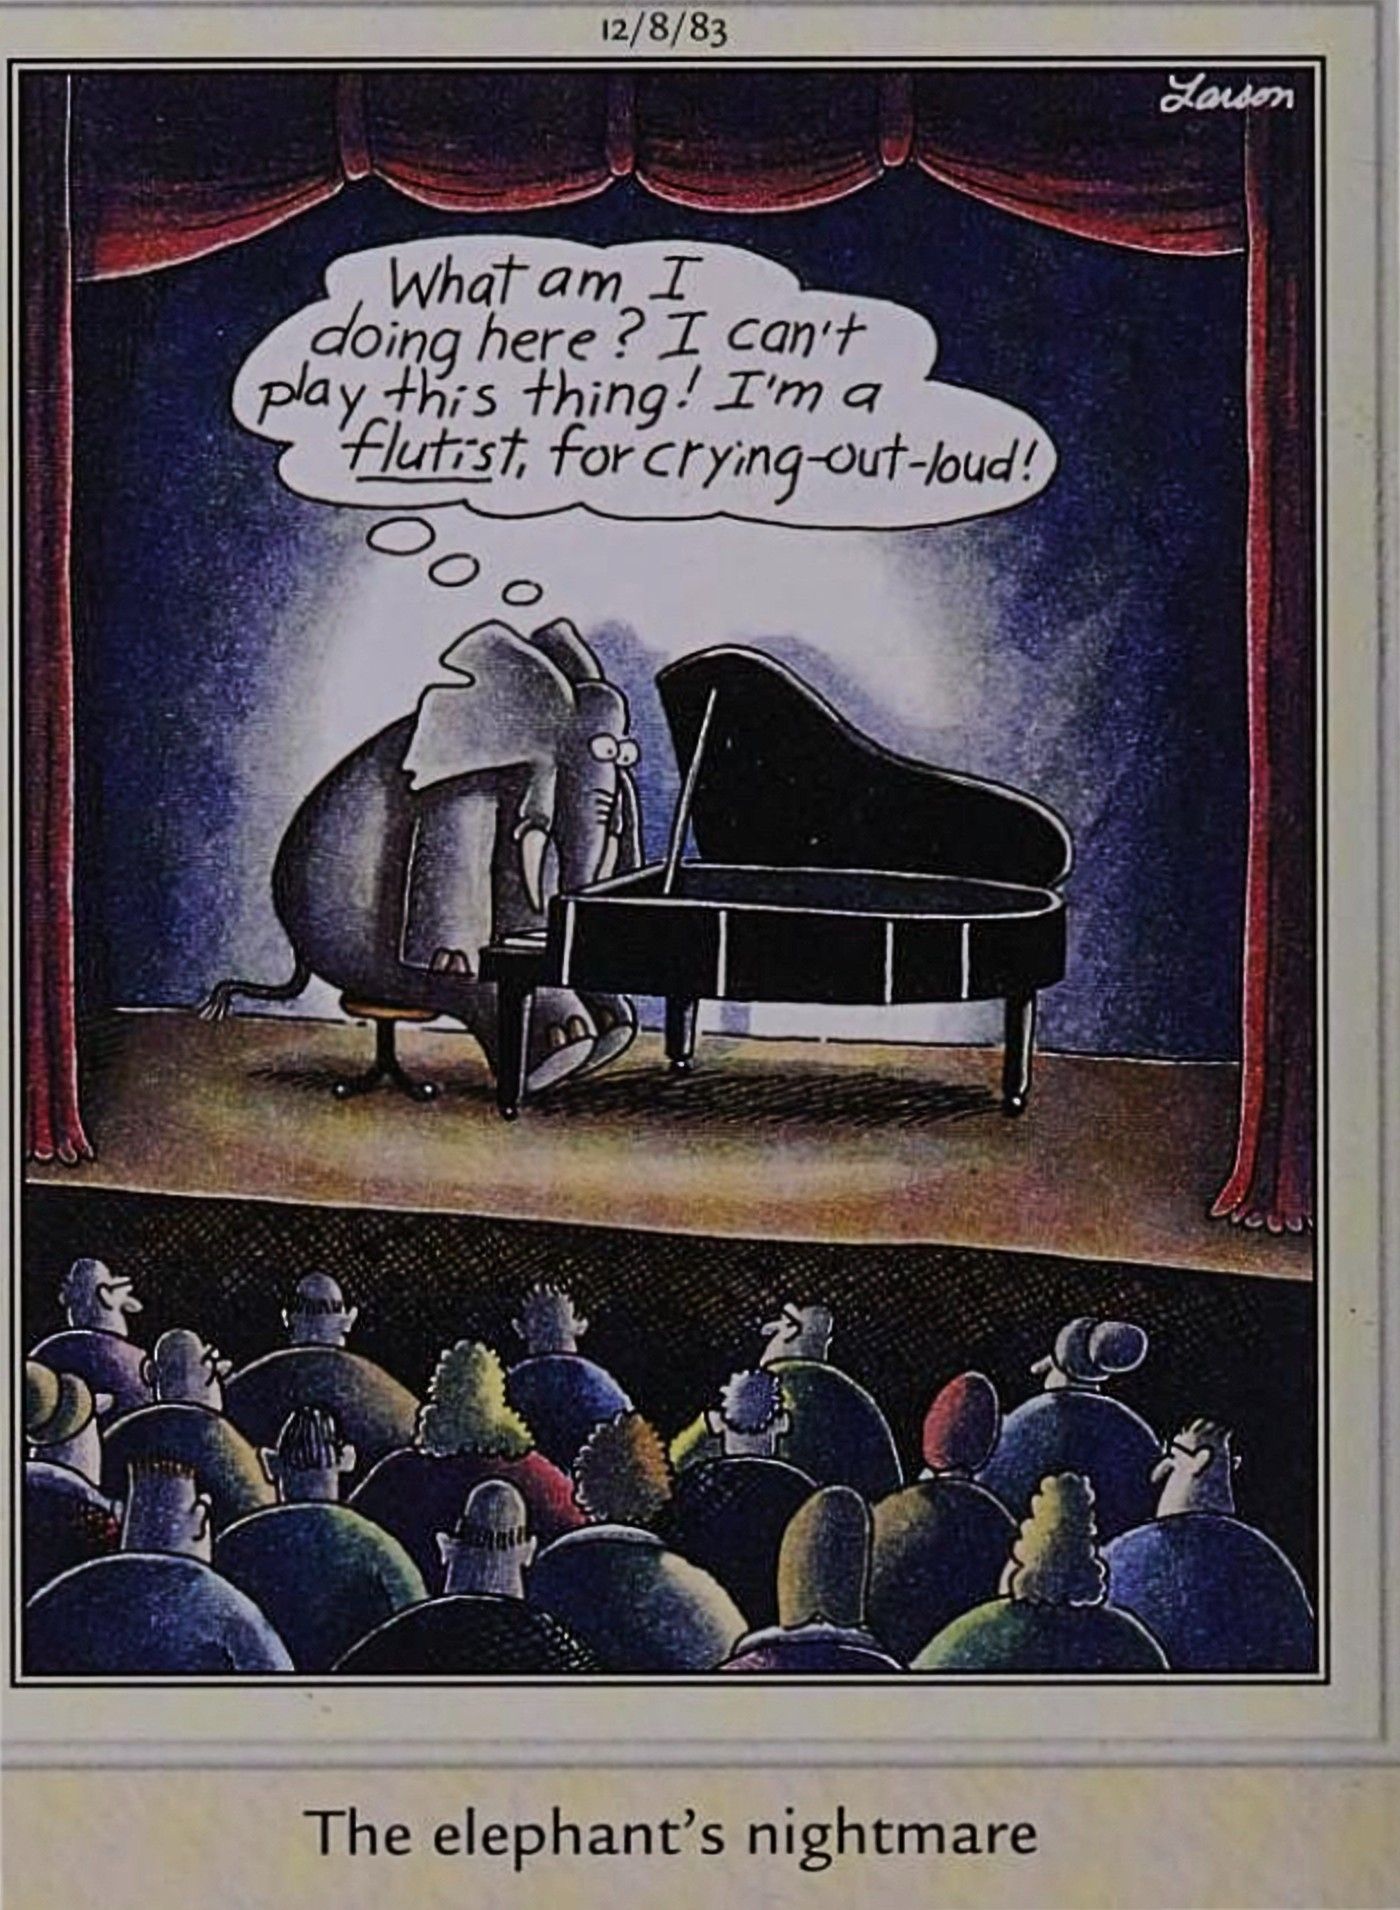 Far Side, elephant is a flutist not a pianist